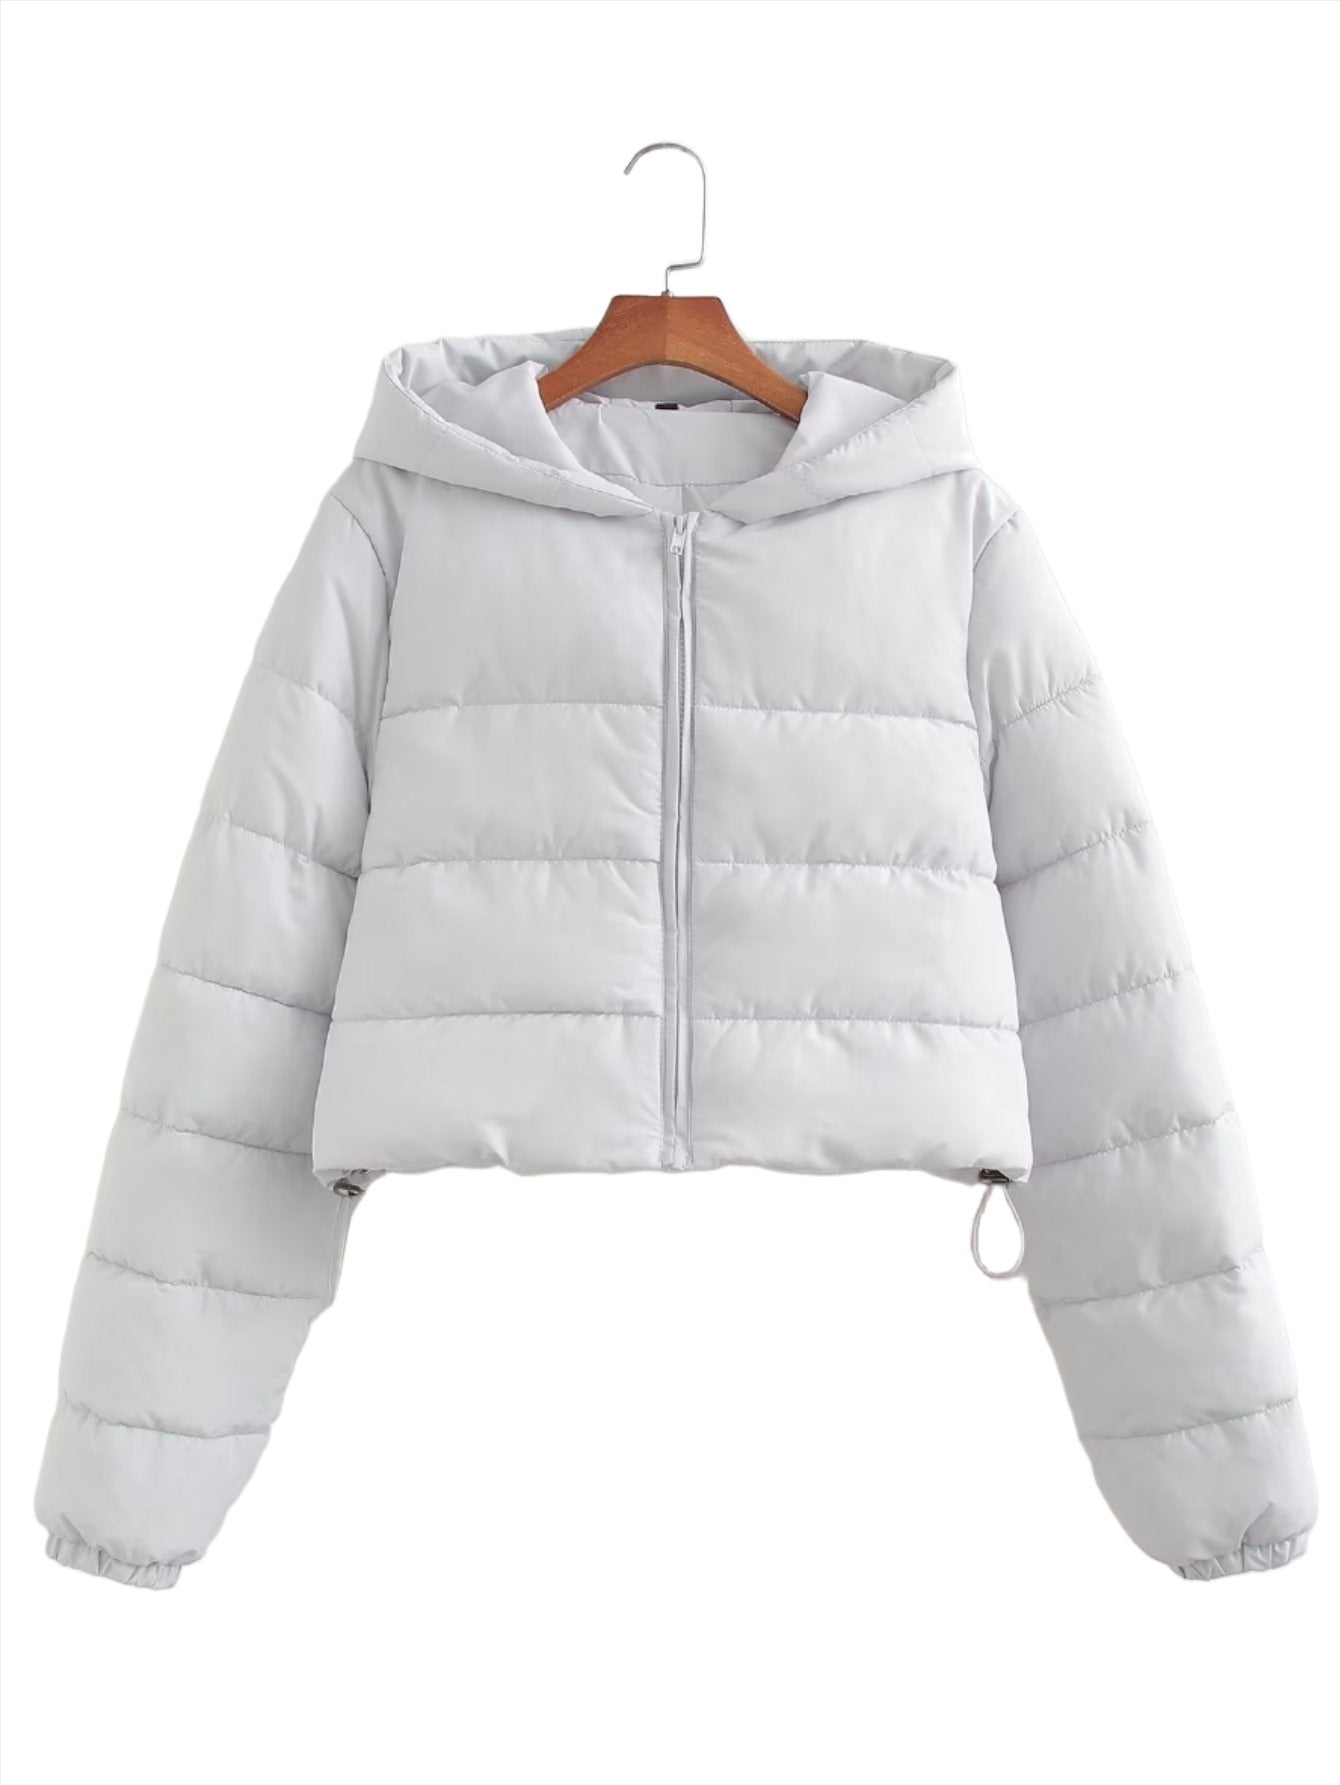 Long Sleeve Cardigan Hooded Warm Cotton Jacket